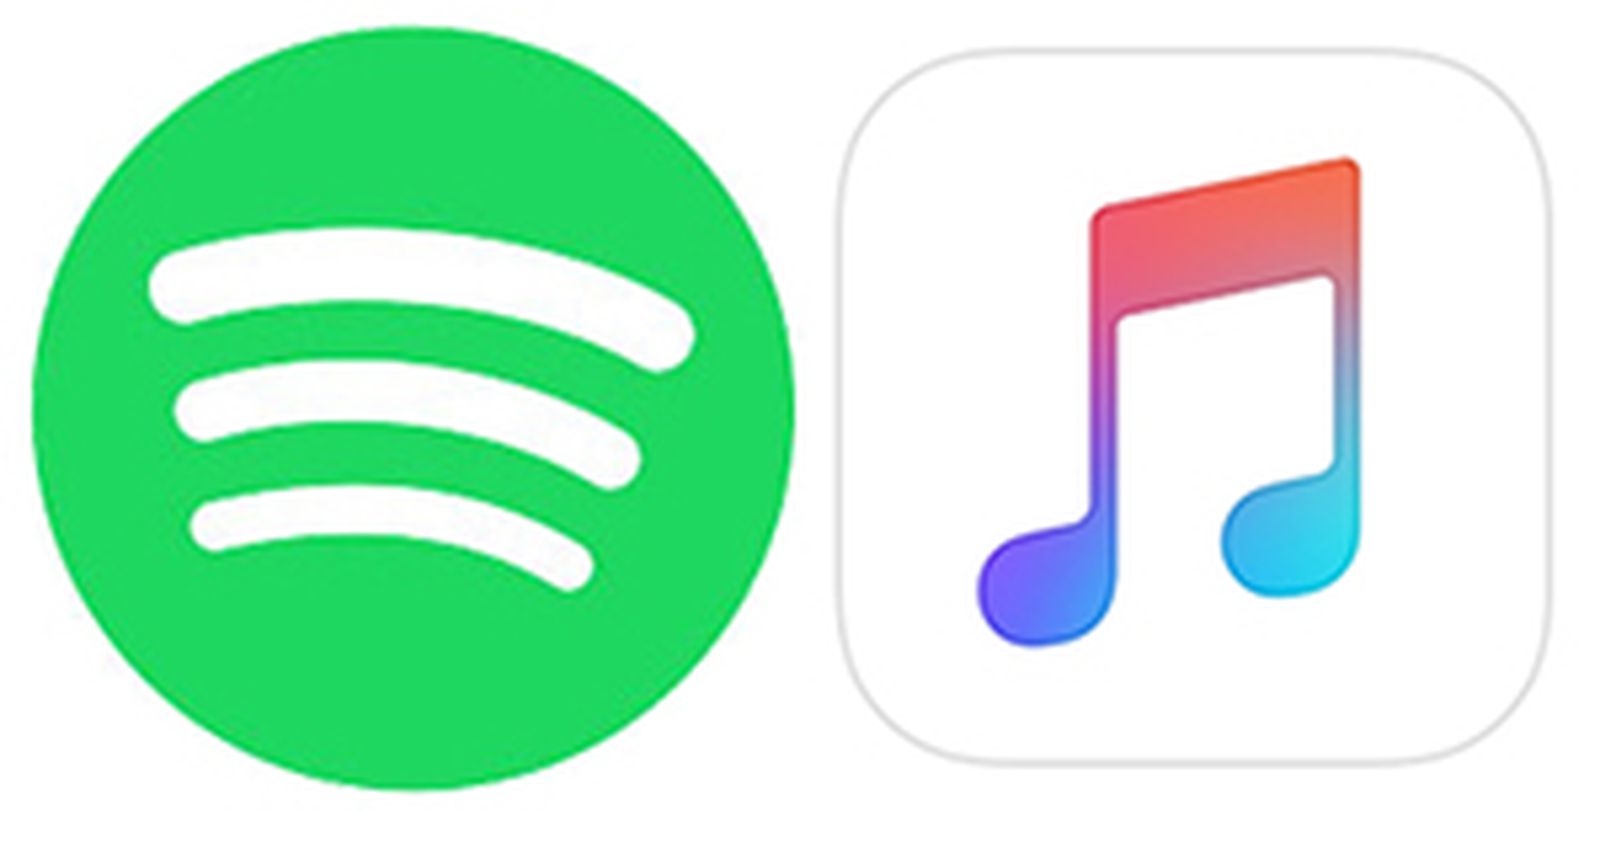 Apple Music vs.  Music Unlimited - MacRumors